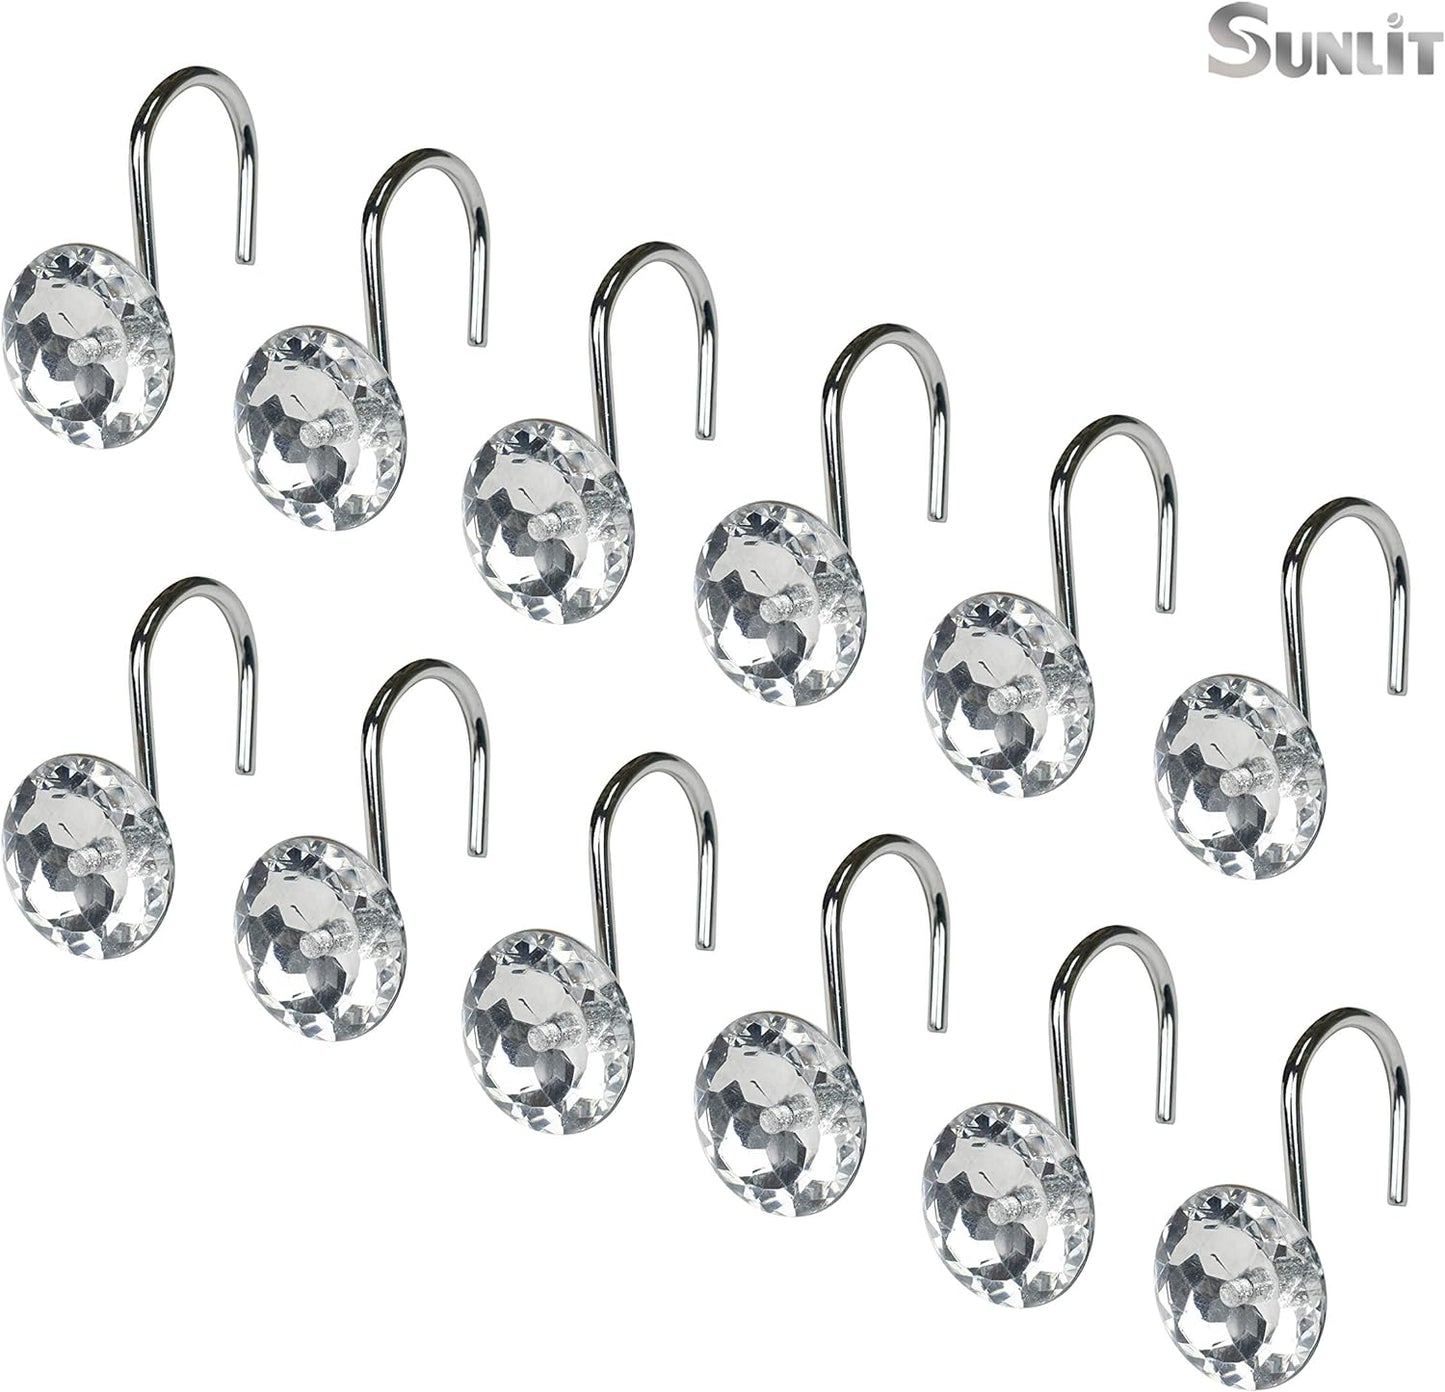 Sunlit Luxury Design Glitter Round Diamond Crystal Gem Bling Shower Curtain Hooks Rust Proof Oil Rubbed Metal Shower Curtain Rings - Rhinestones Clear Glam Shower Curtain Hooks - 12 Pack